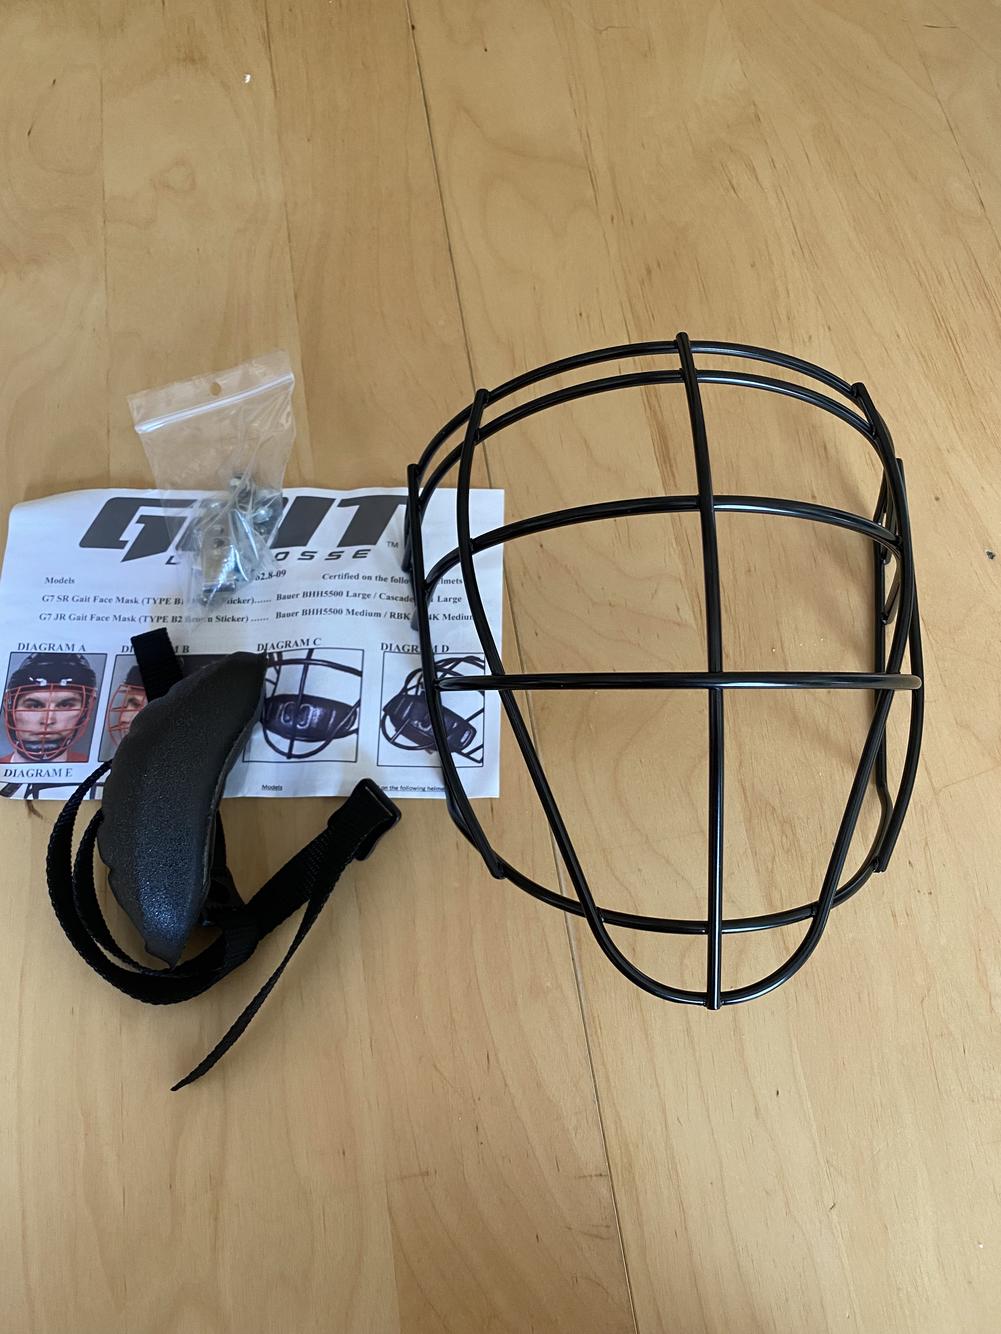 New Gait G7 Senior Box Lacrosse Face Mask indoor cage BOXFM helmet sr black lax 